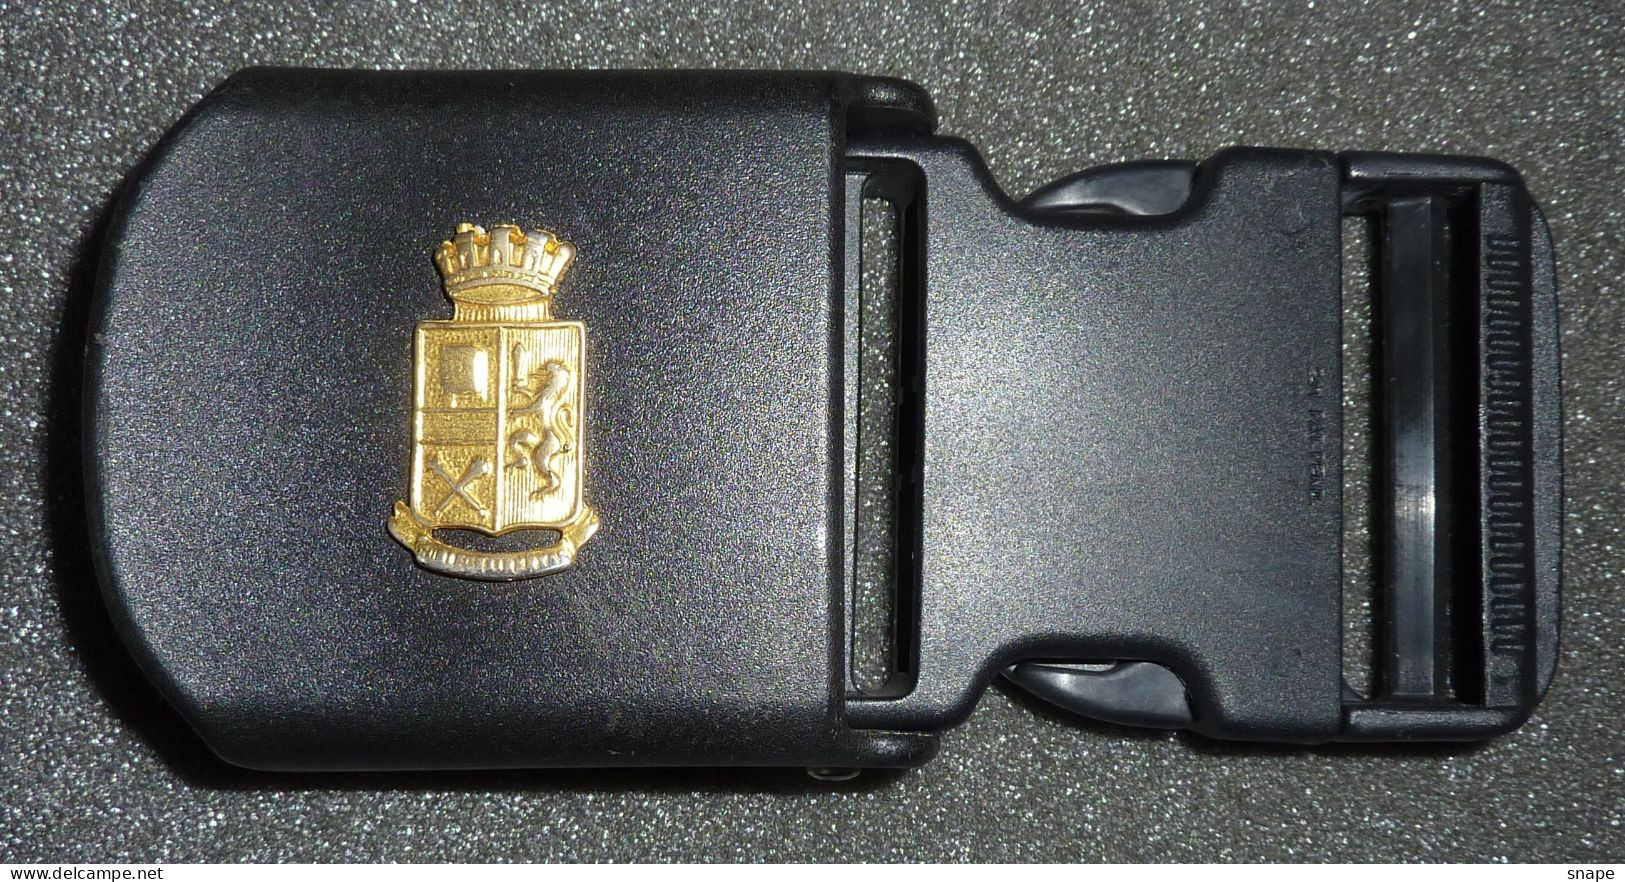 FIBBIA CINTURONE OPERATIVO Polizia - Obsoleta Usata - Italian Police Belt Buckle - Used (286-3) - Police & Gendarmerie